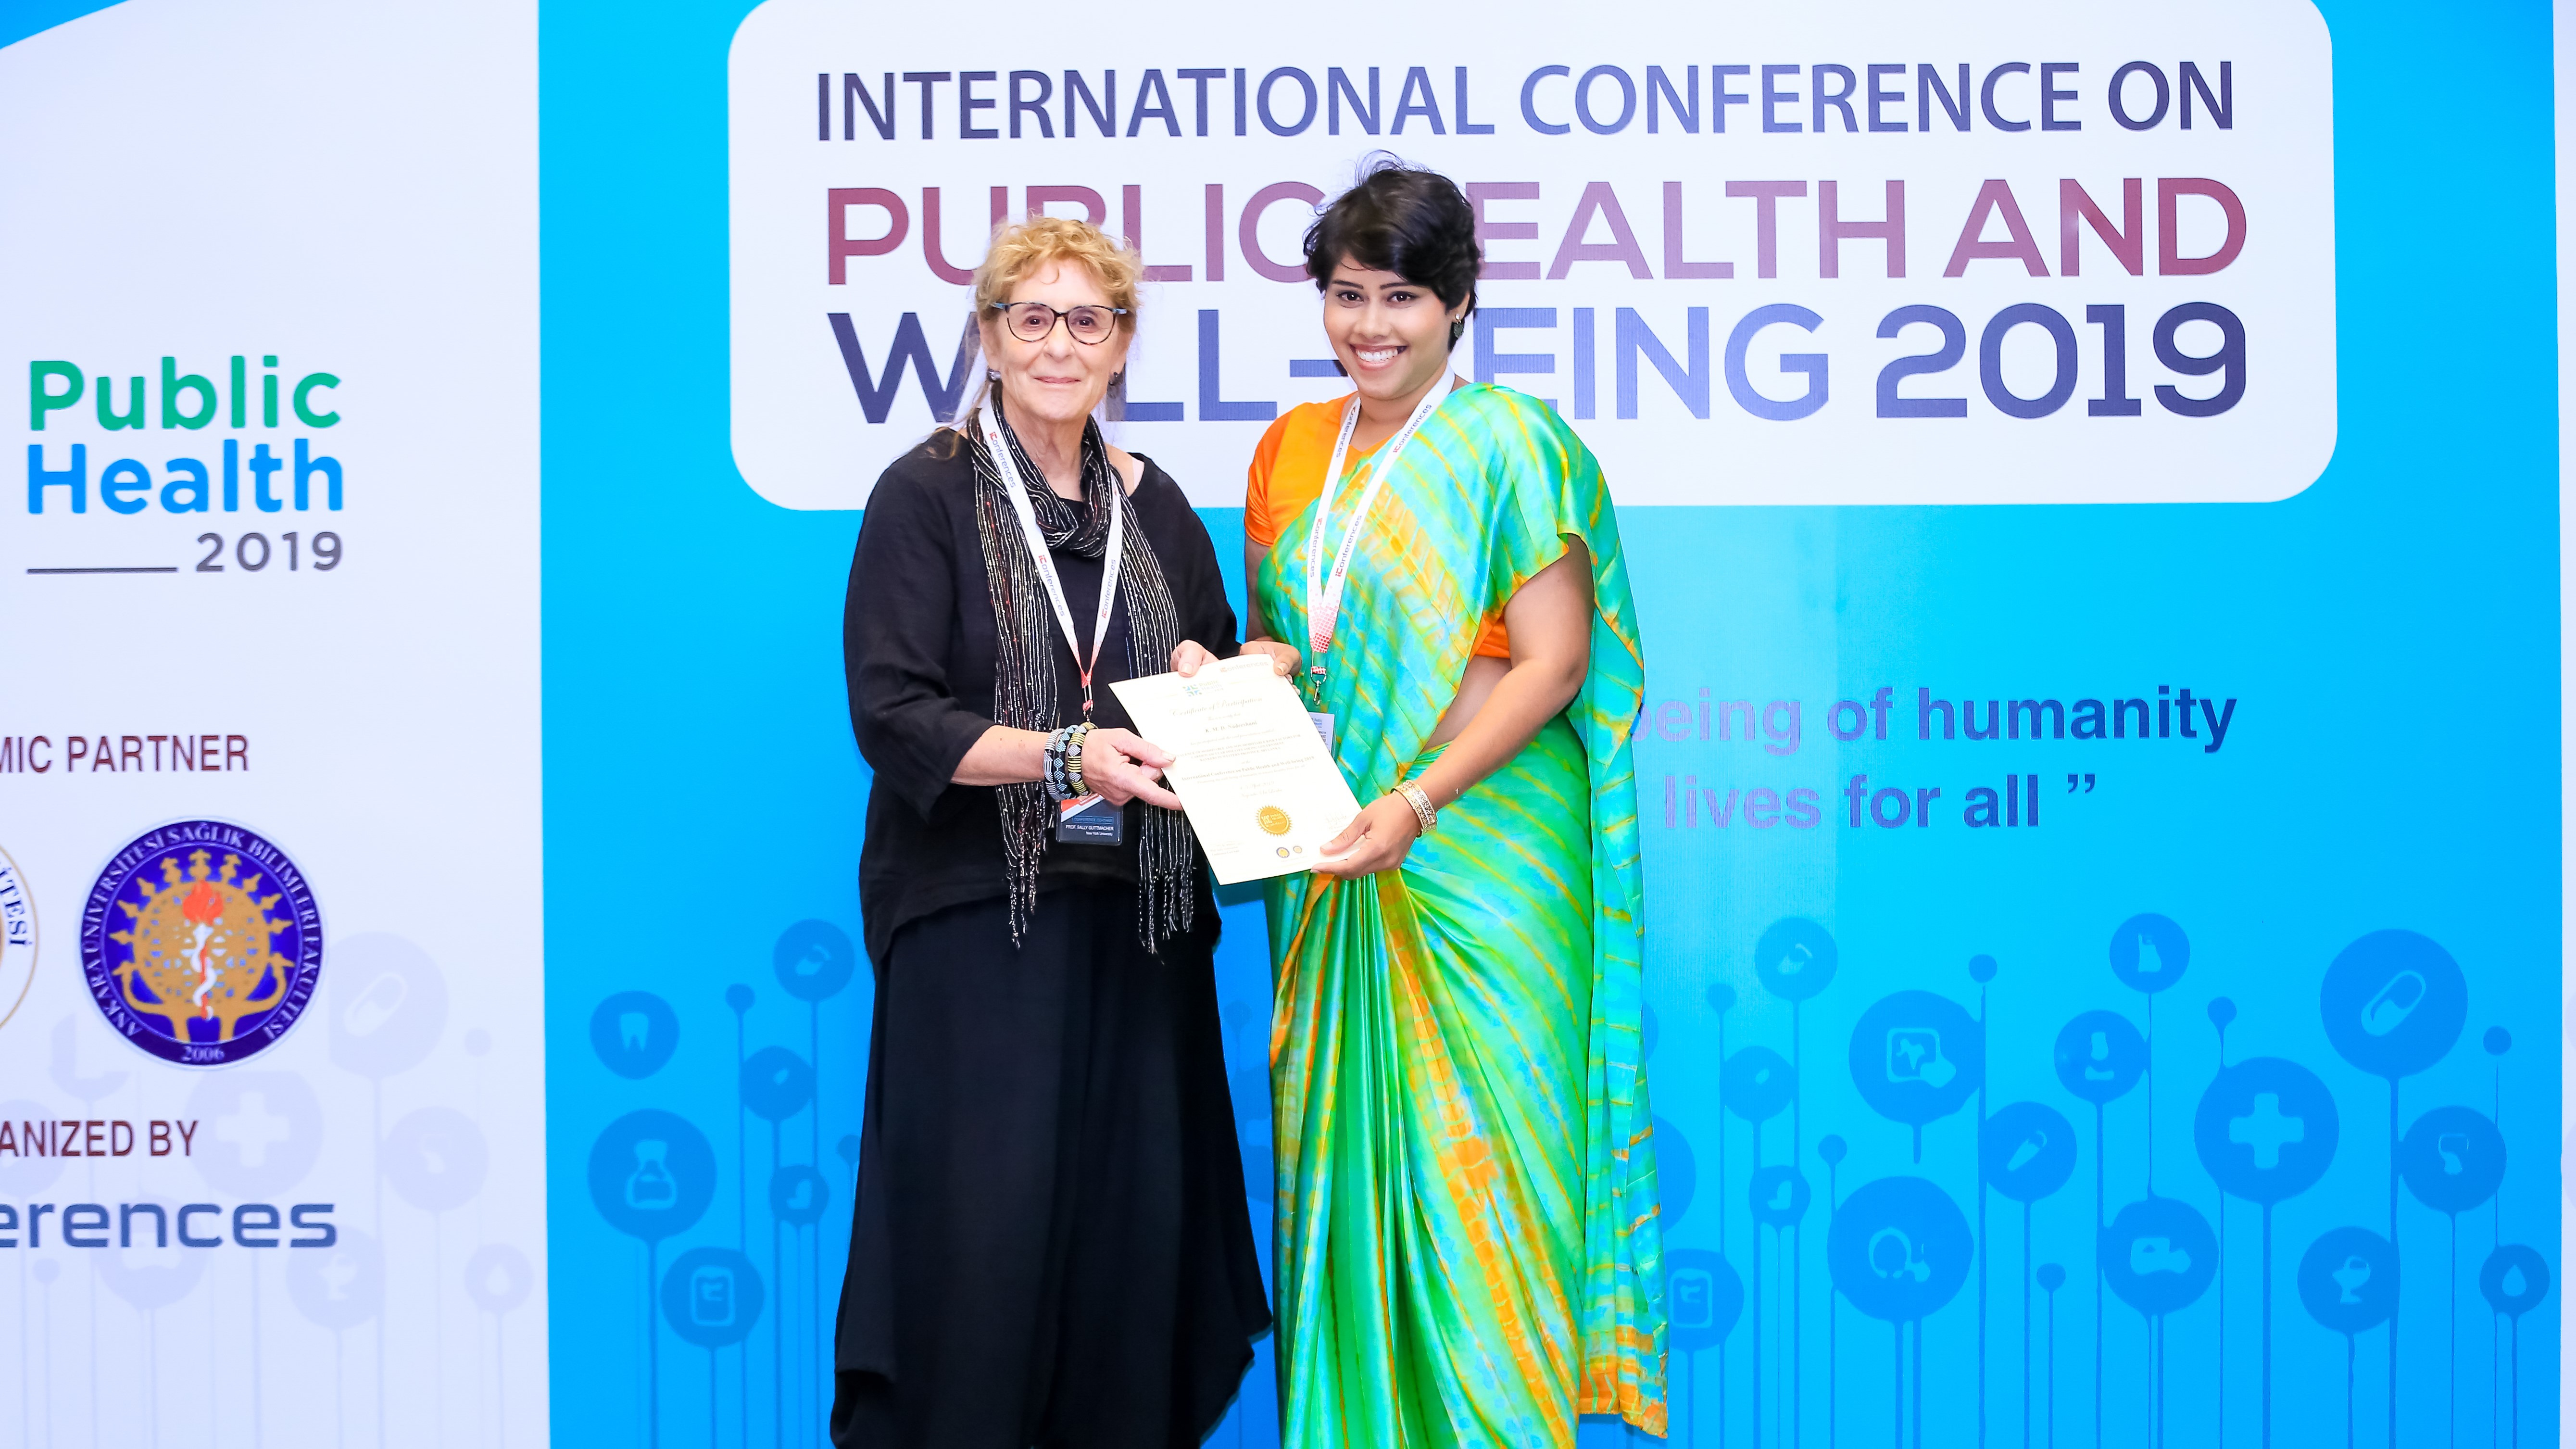 International Public Health Conferences 2019 / Public Health Conference